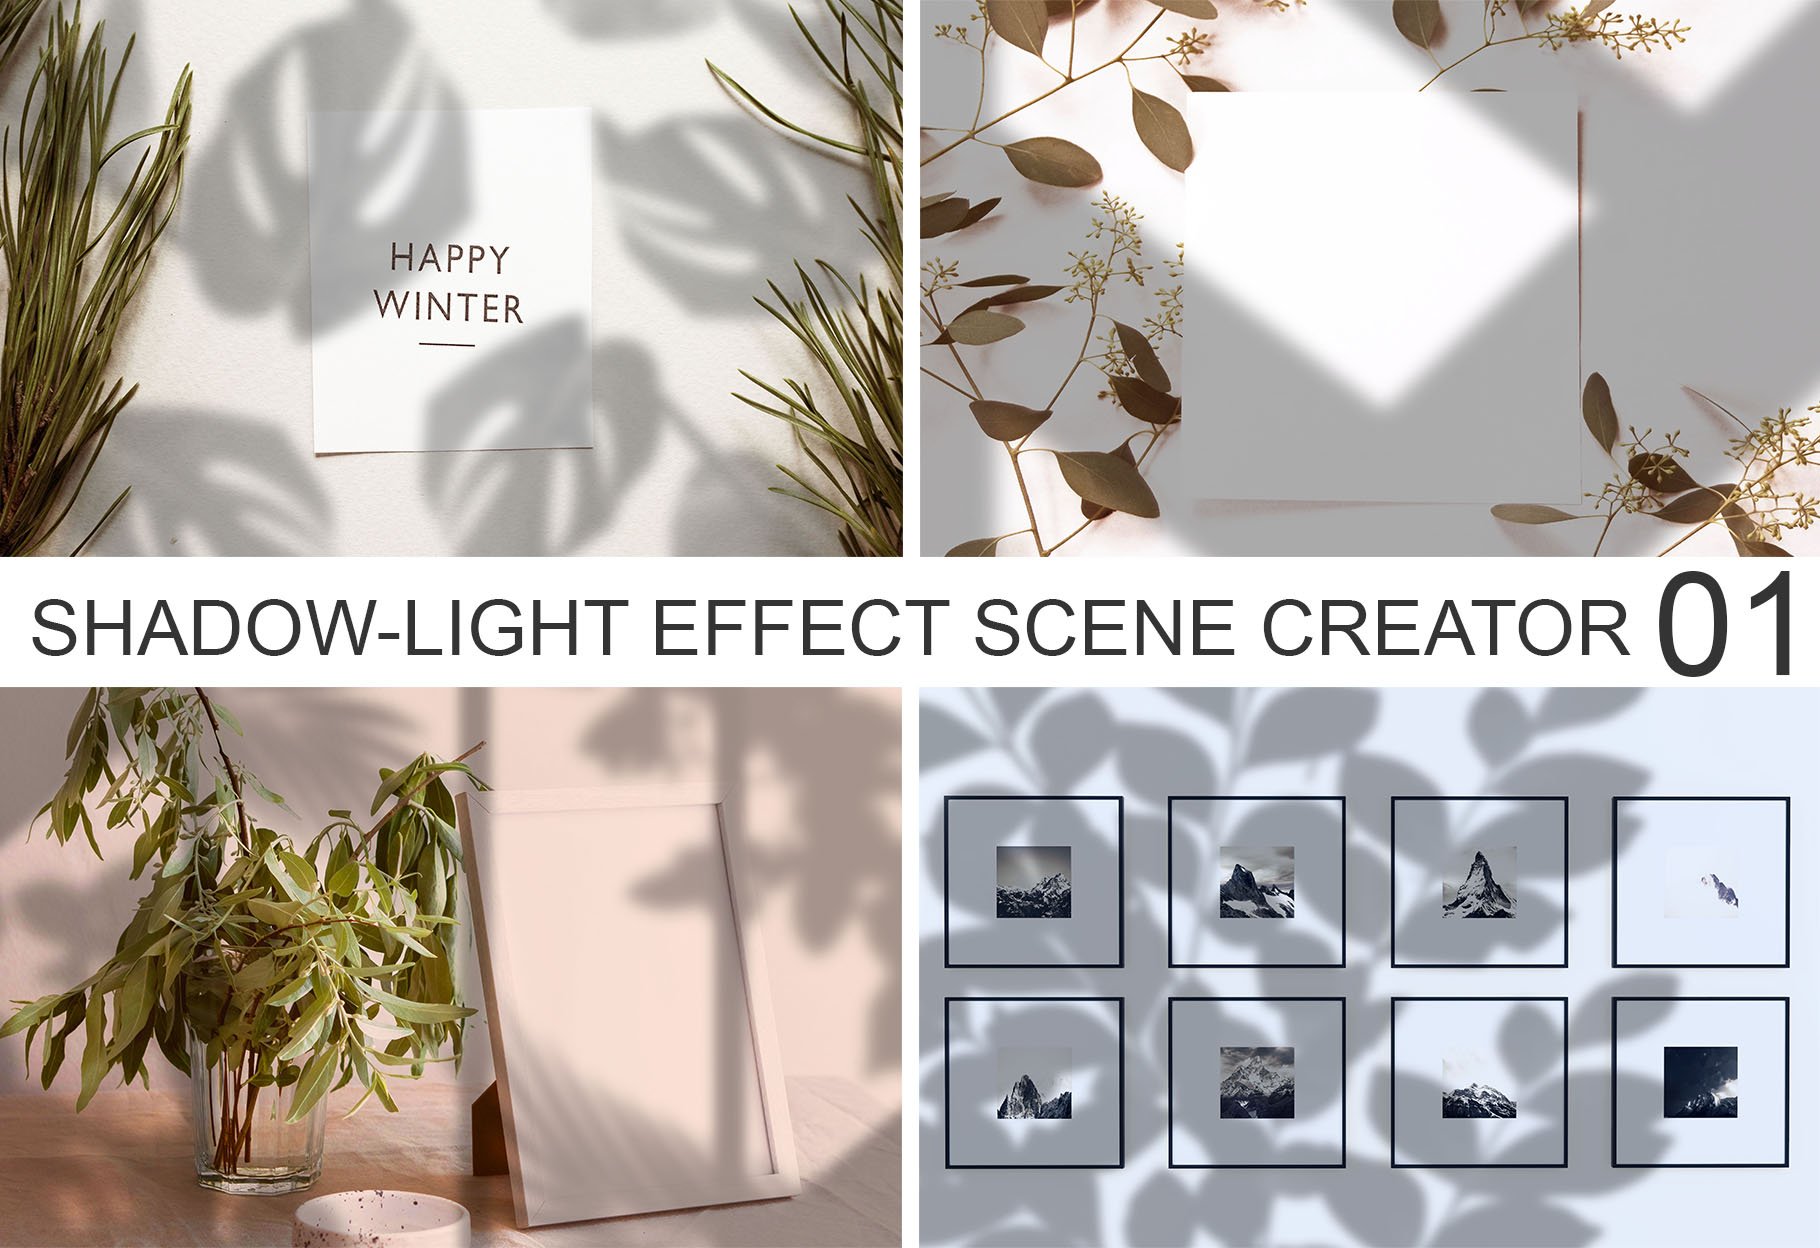 Shadow-Light Effect Scene Creator 01 cover image.